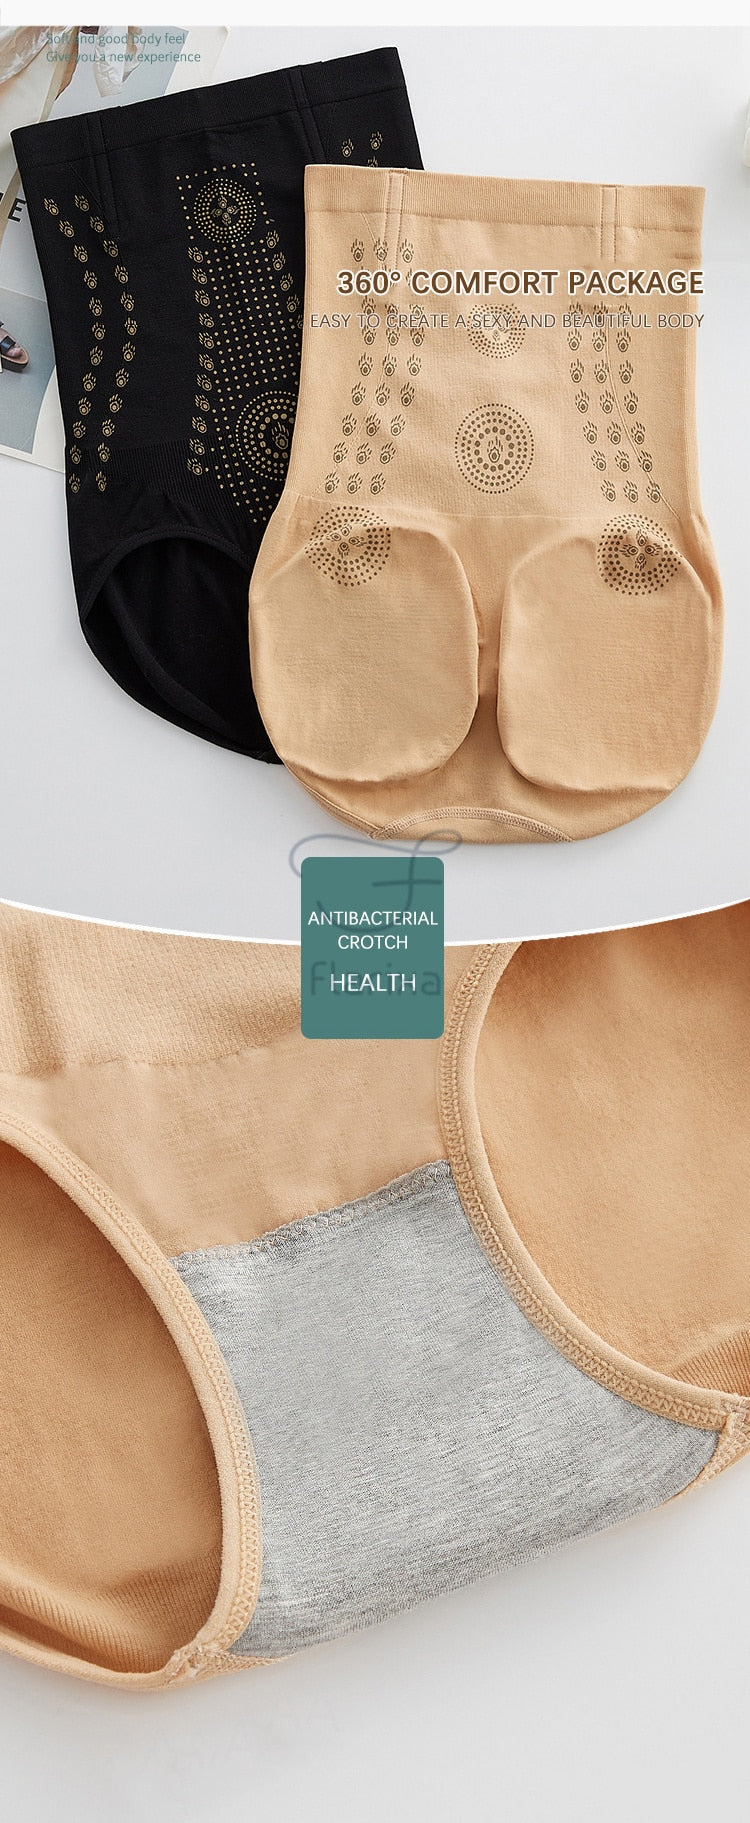 Flarixa Seamless Women's High Waist Belly Control Panties Body Shaping Underwear